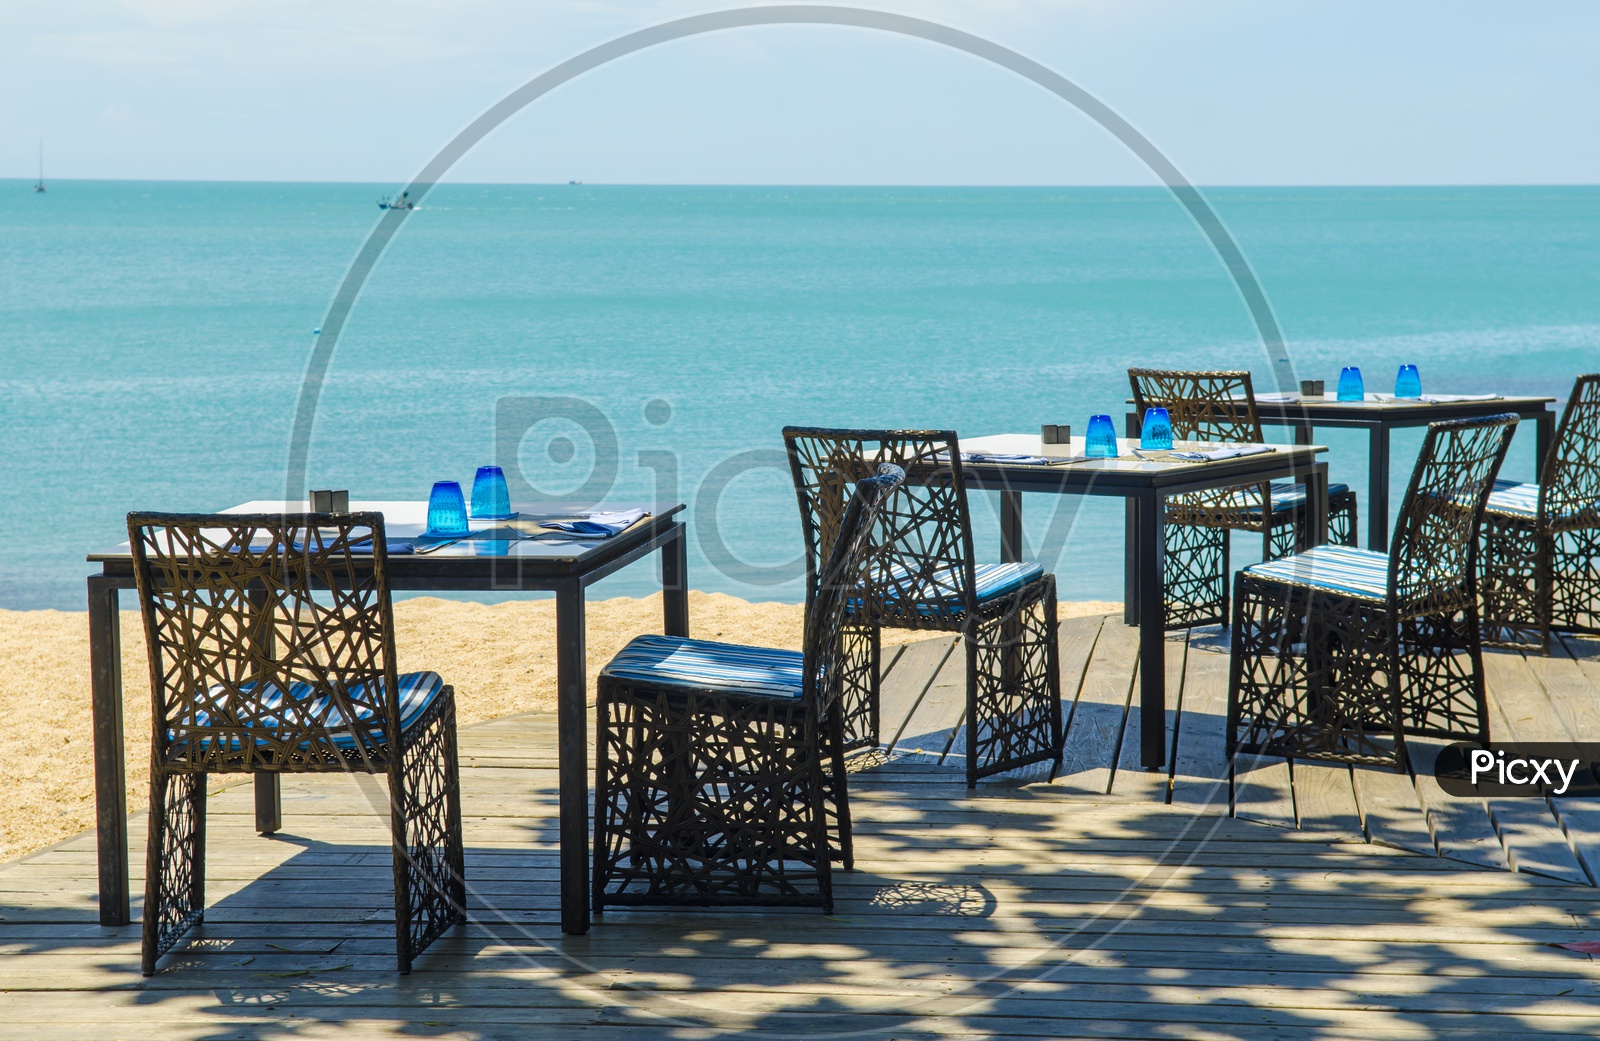 A Dining area of restaurant along the beach